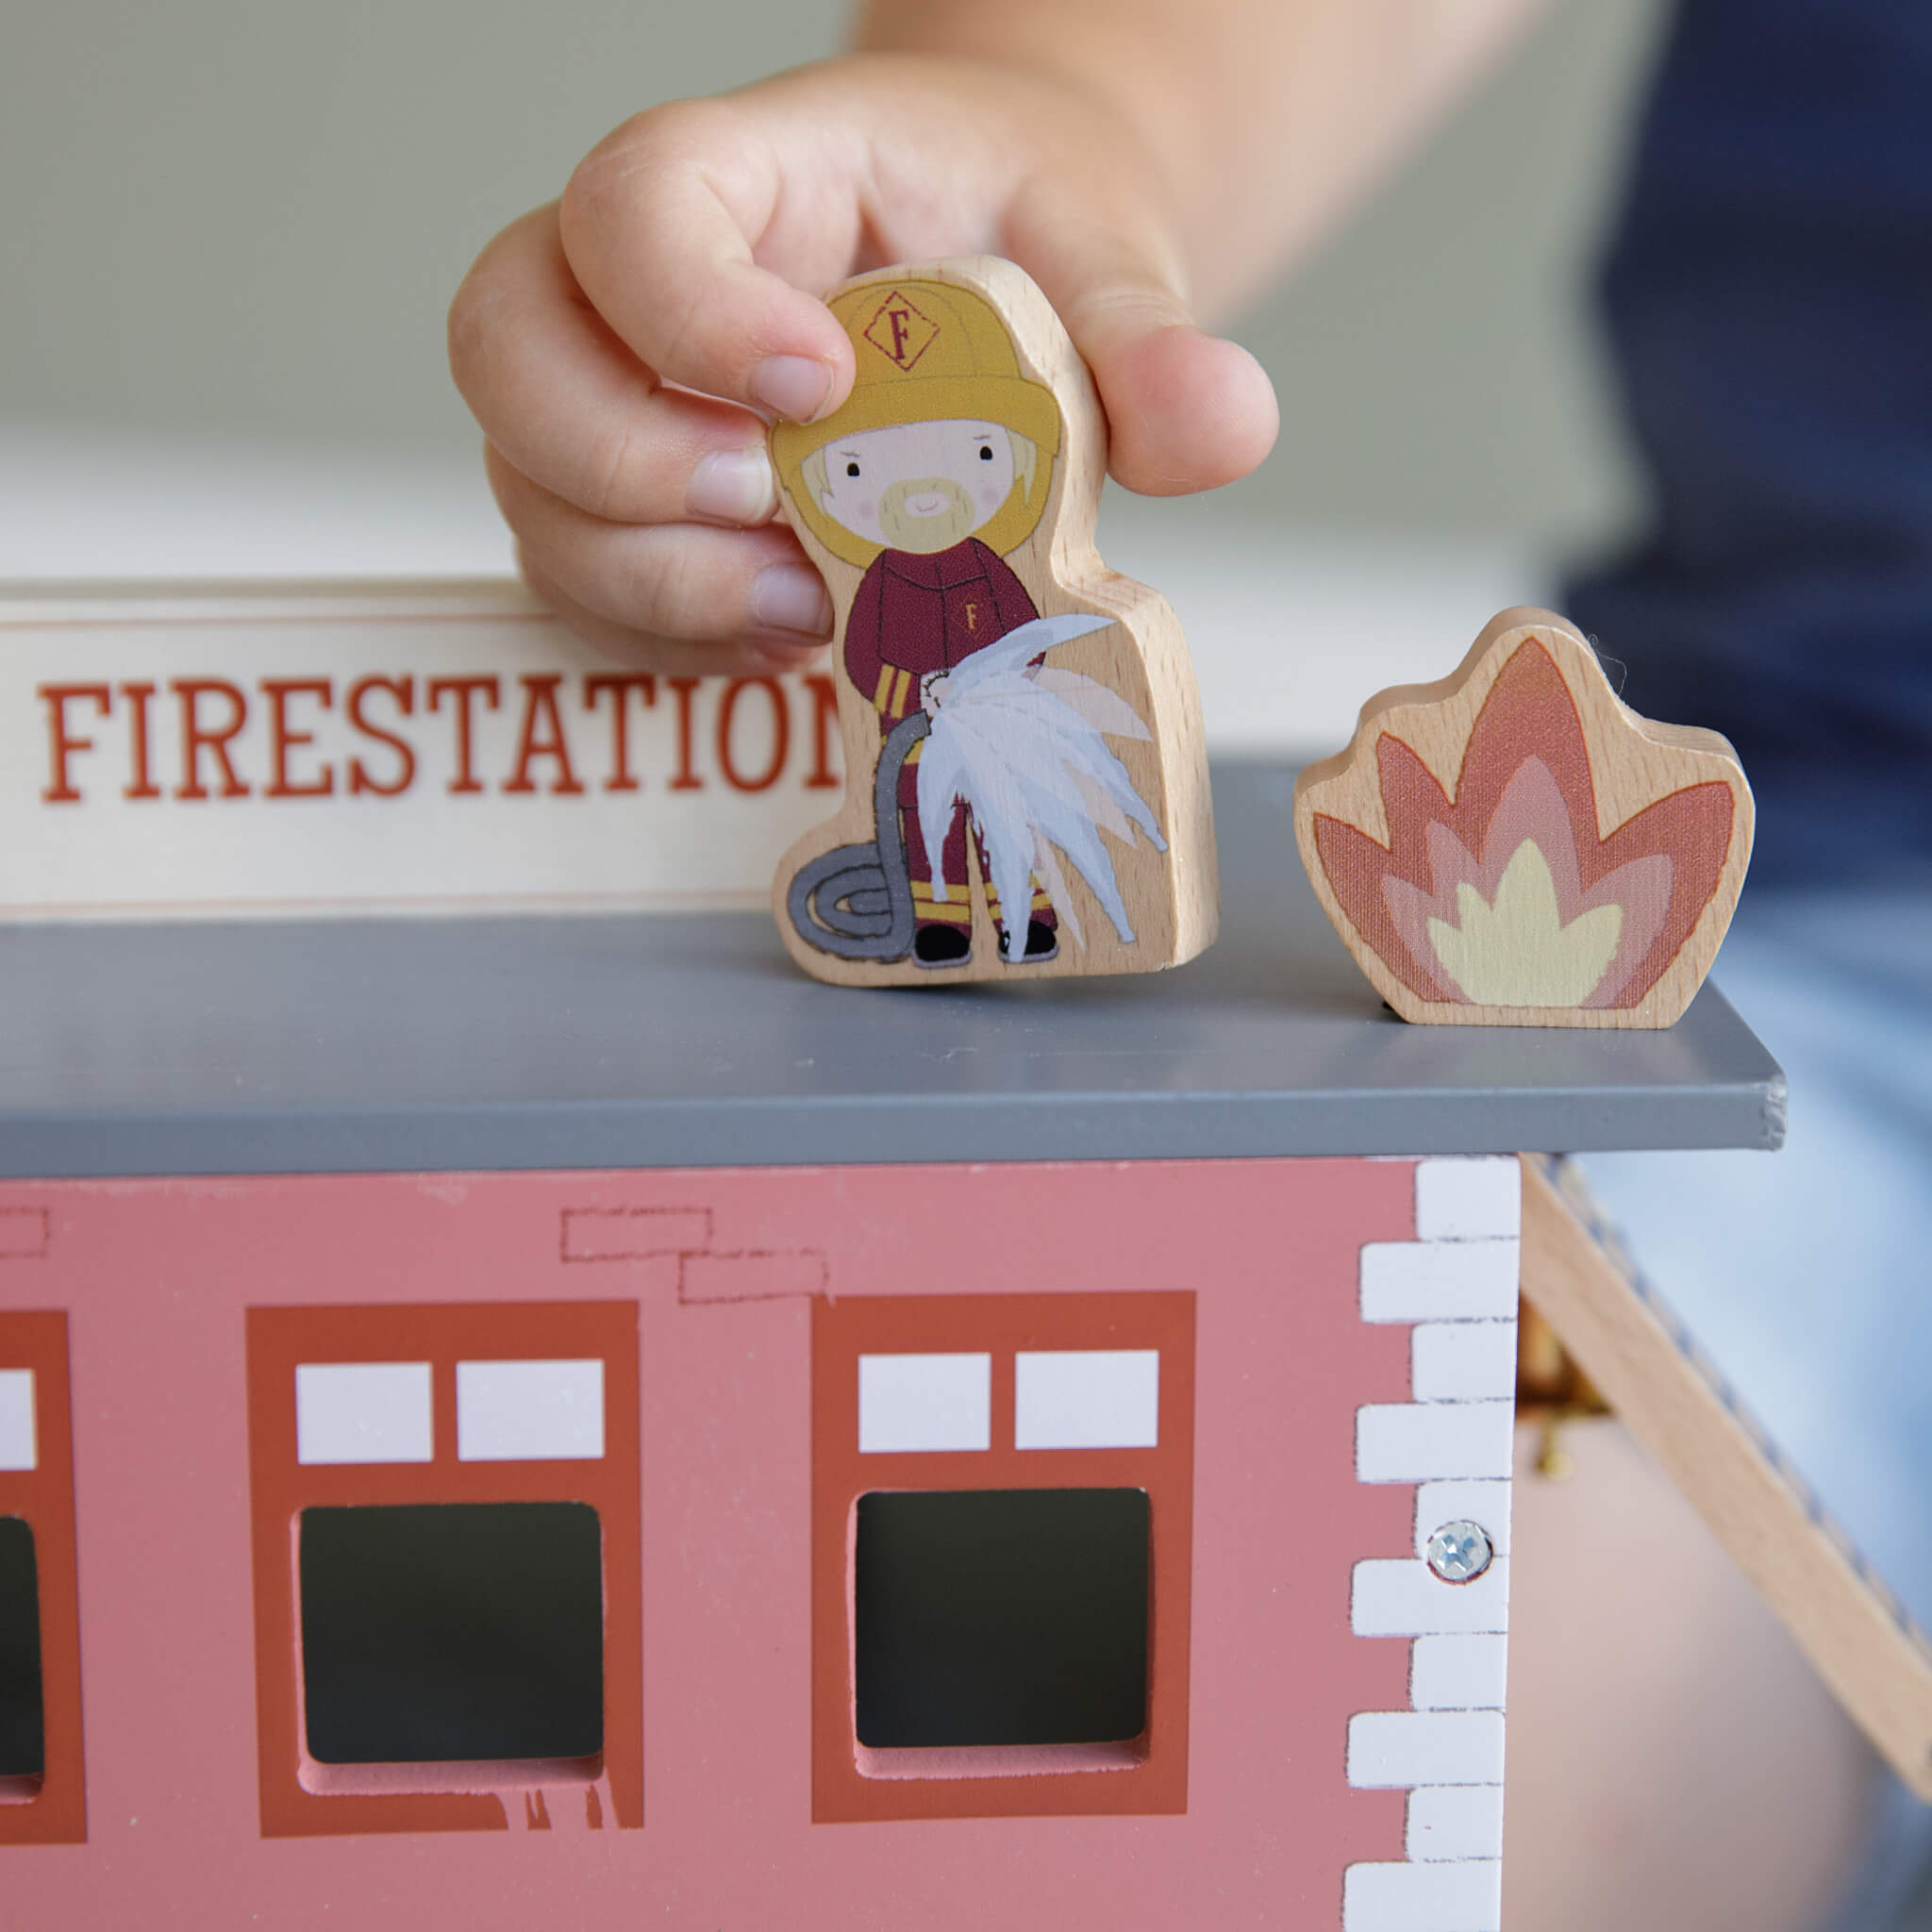 Little Dutch Wooden Railway Firestation Toy